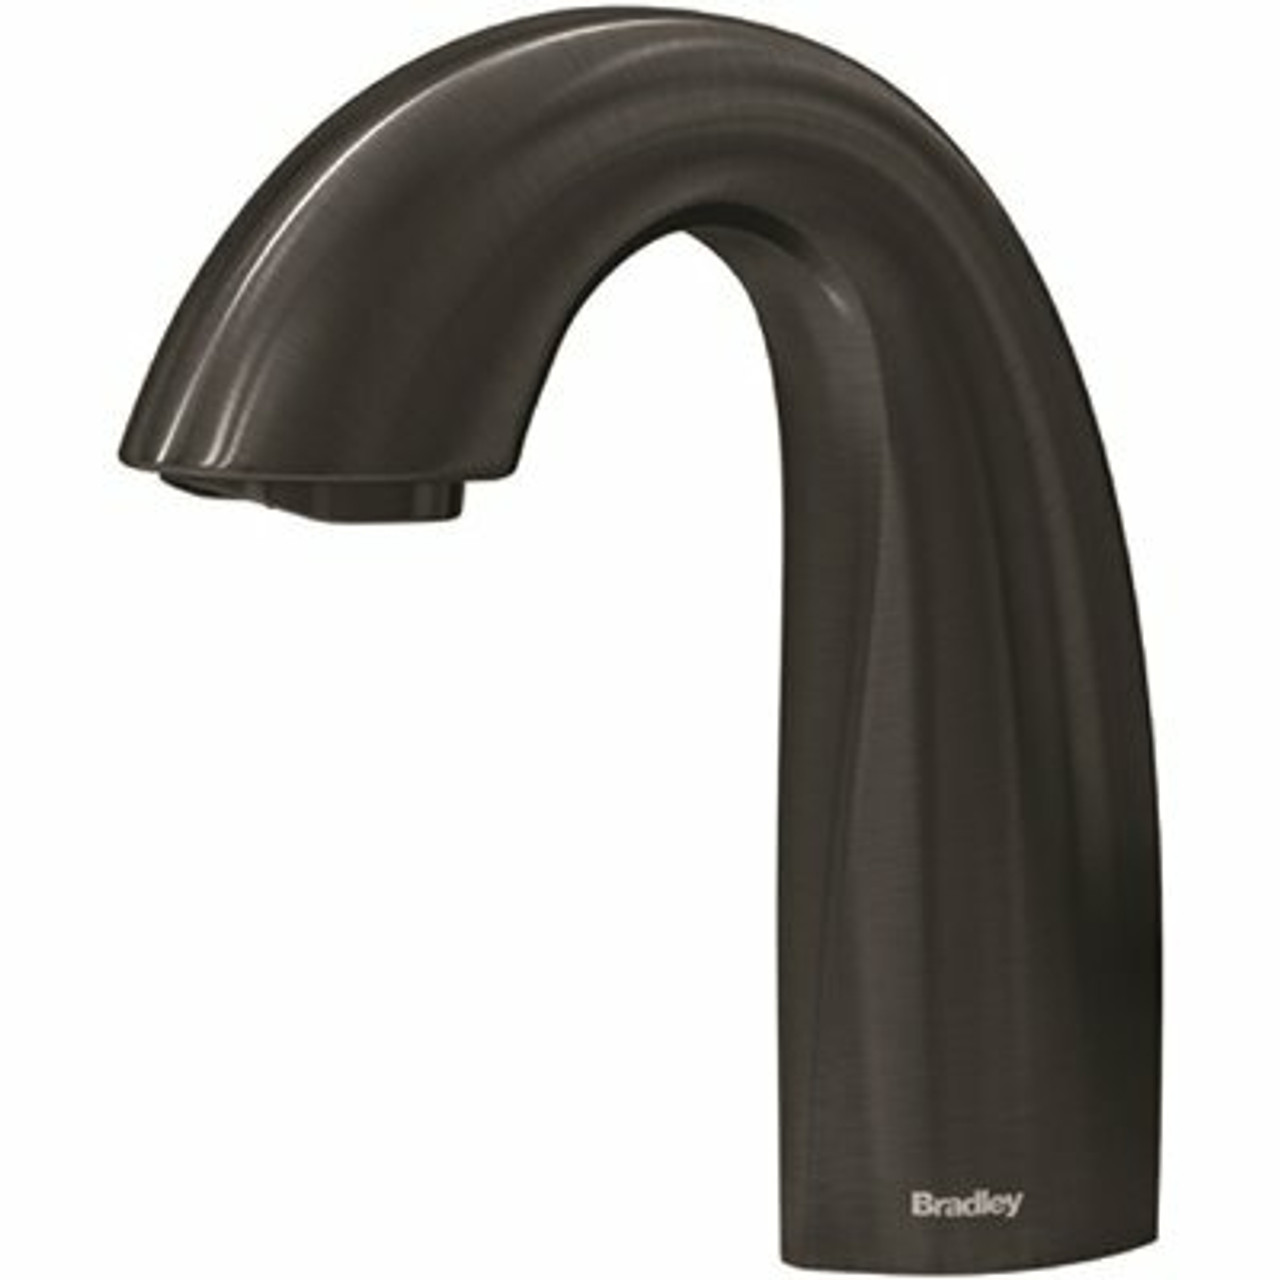 Bradley Crestt Verge Faucet In Brushed Black - 313831445